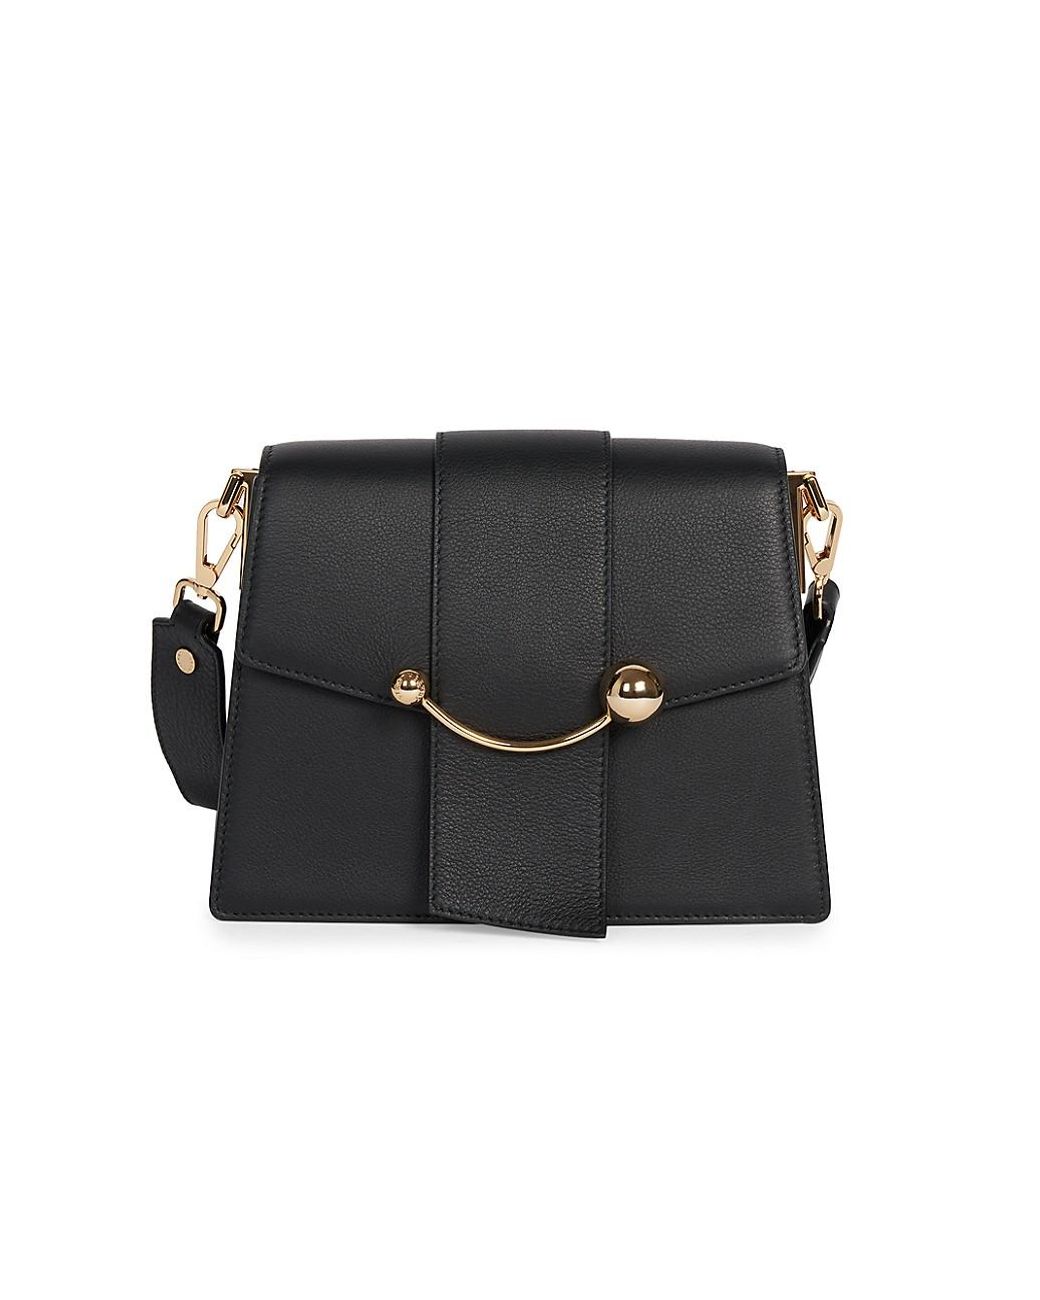 Strathberry Box Crescent Leather Shoulder Bag in Black - Save 21% - Lyst